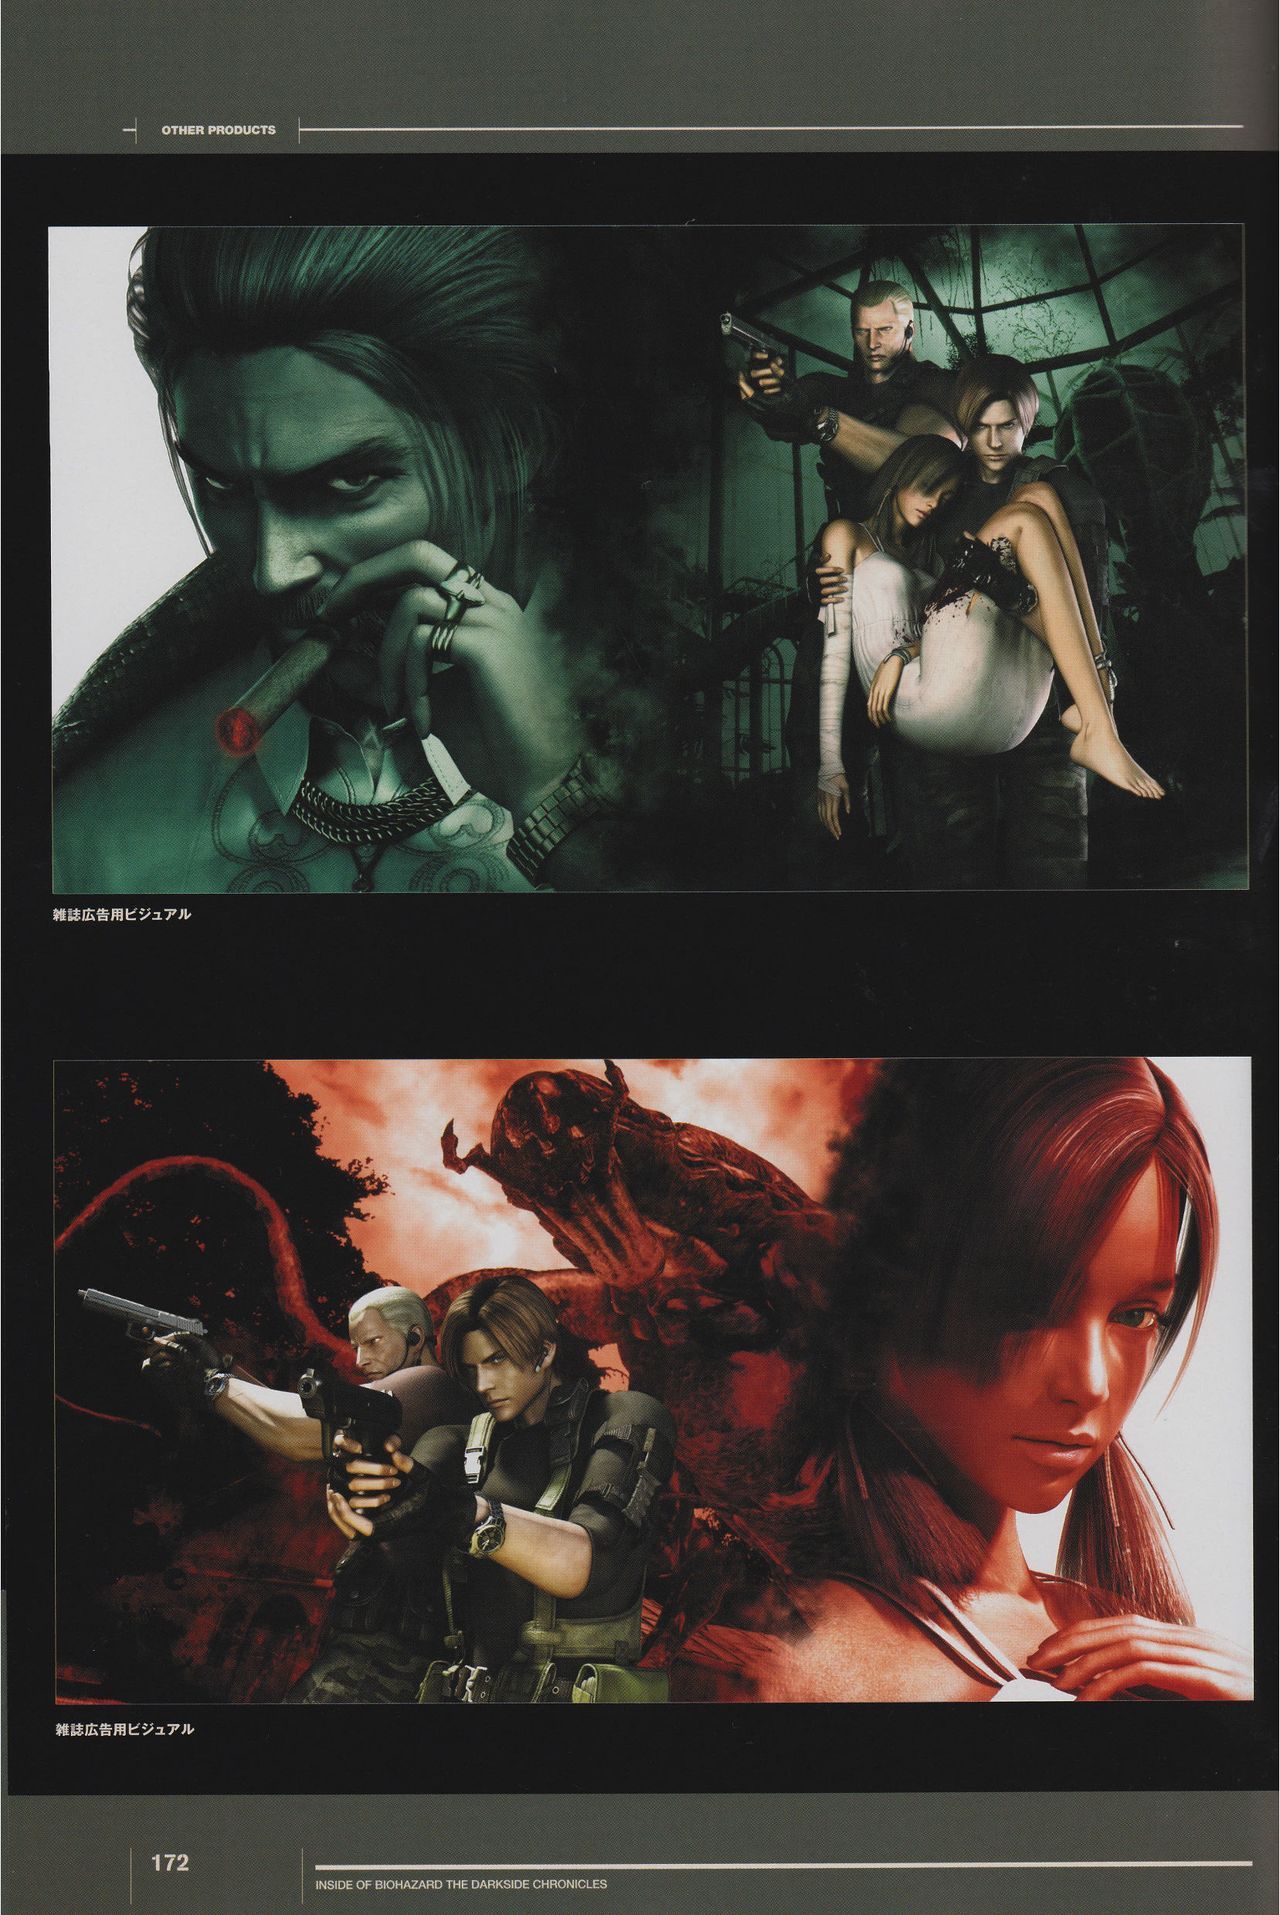 Resident Evil: The Darkside Chronicles Artbook 172